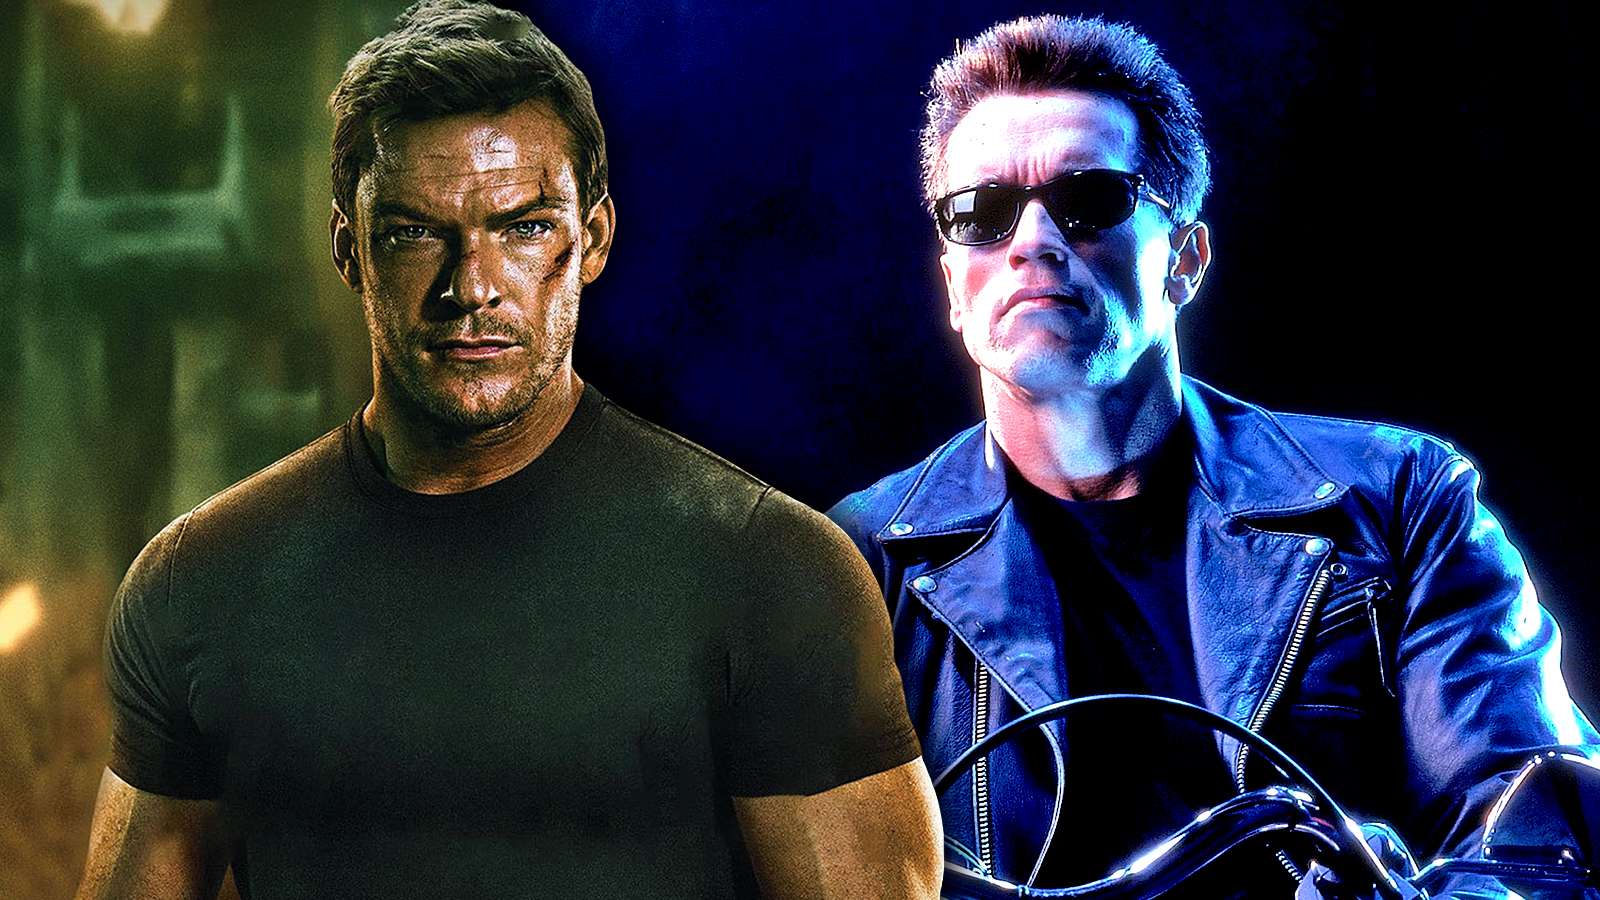 Jack Reacher and the Terminator